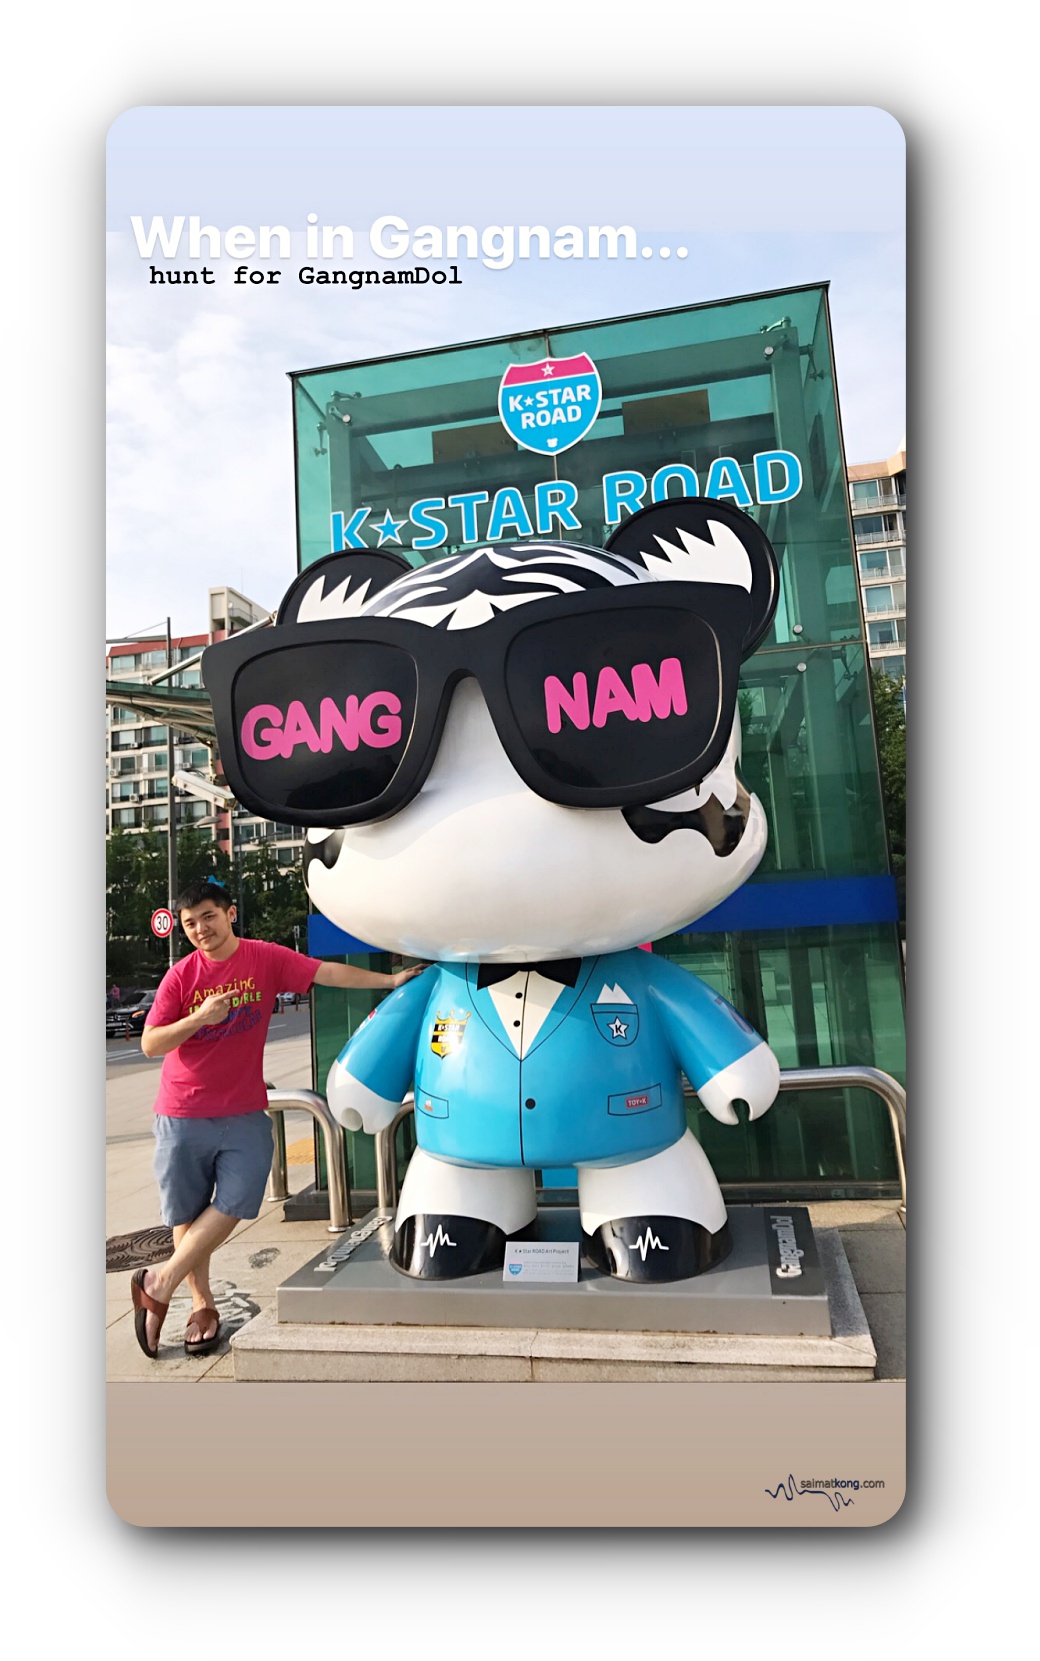 Seoul Trip 2019 Awesome Summer in Seoul - The 3-meter-tall PSY GangnamDol